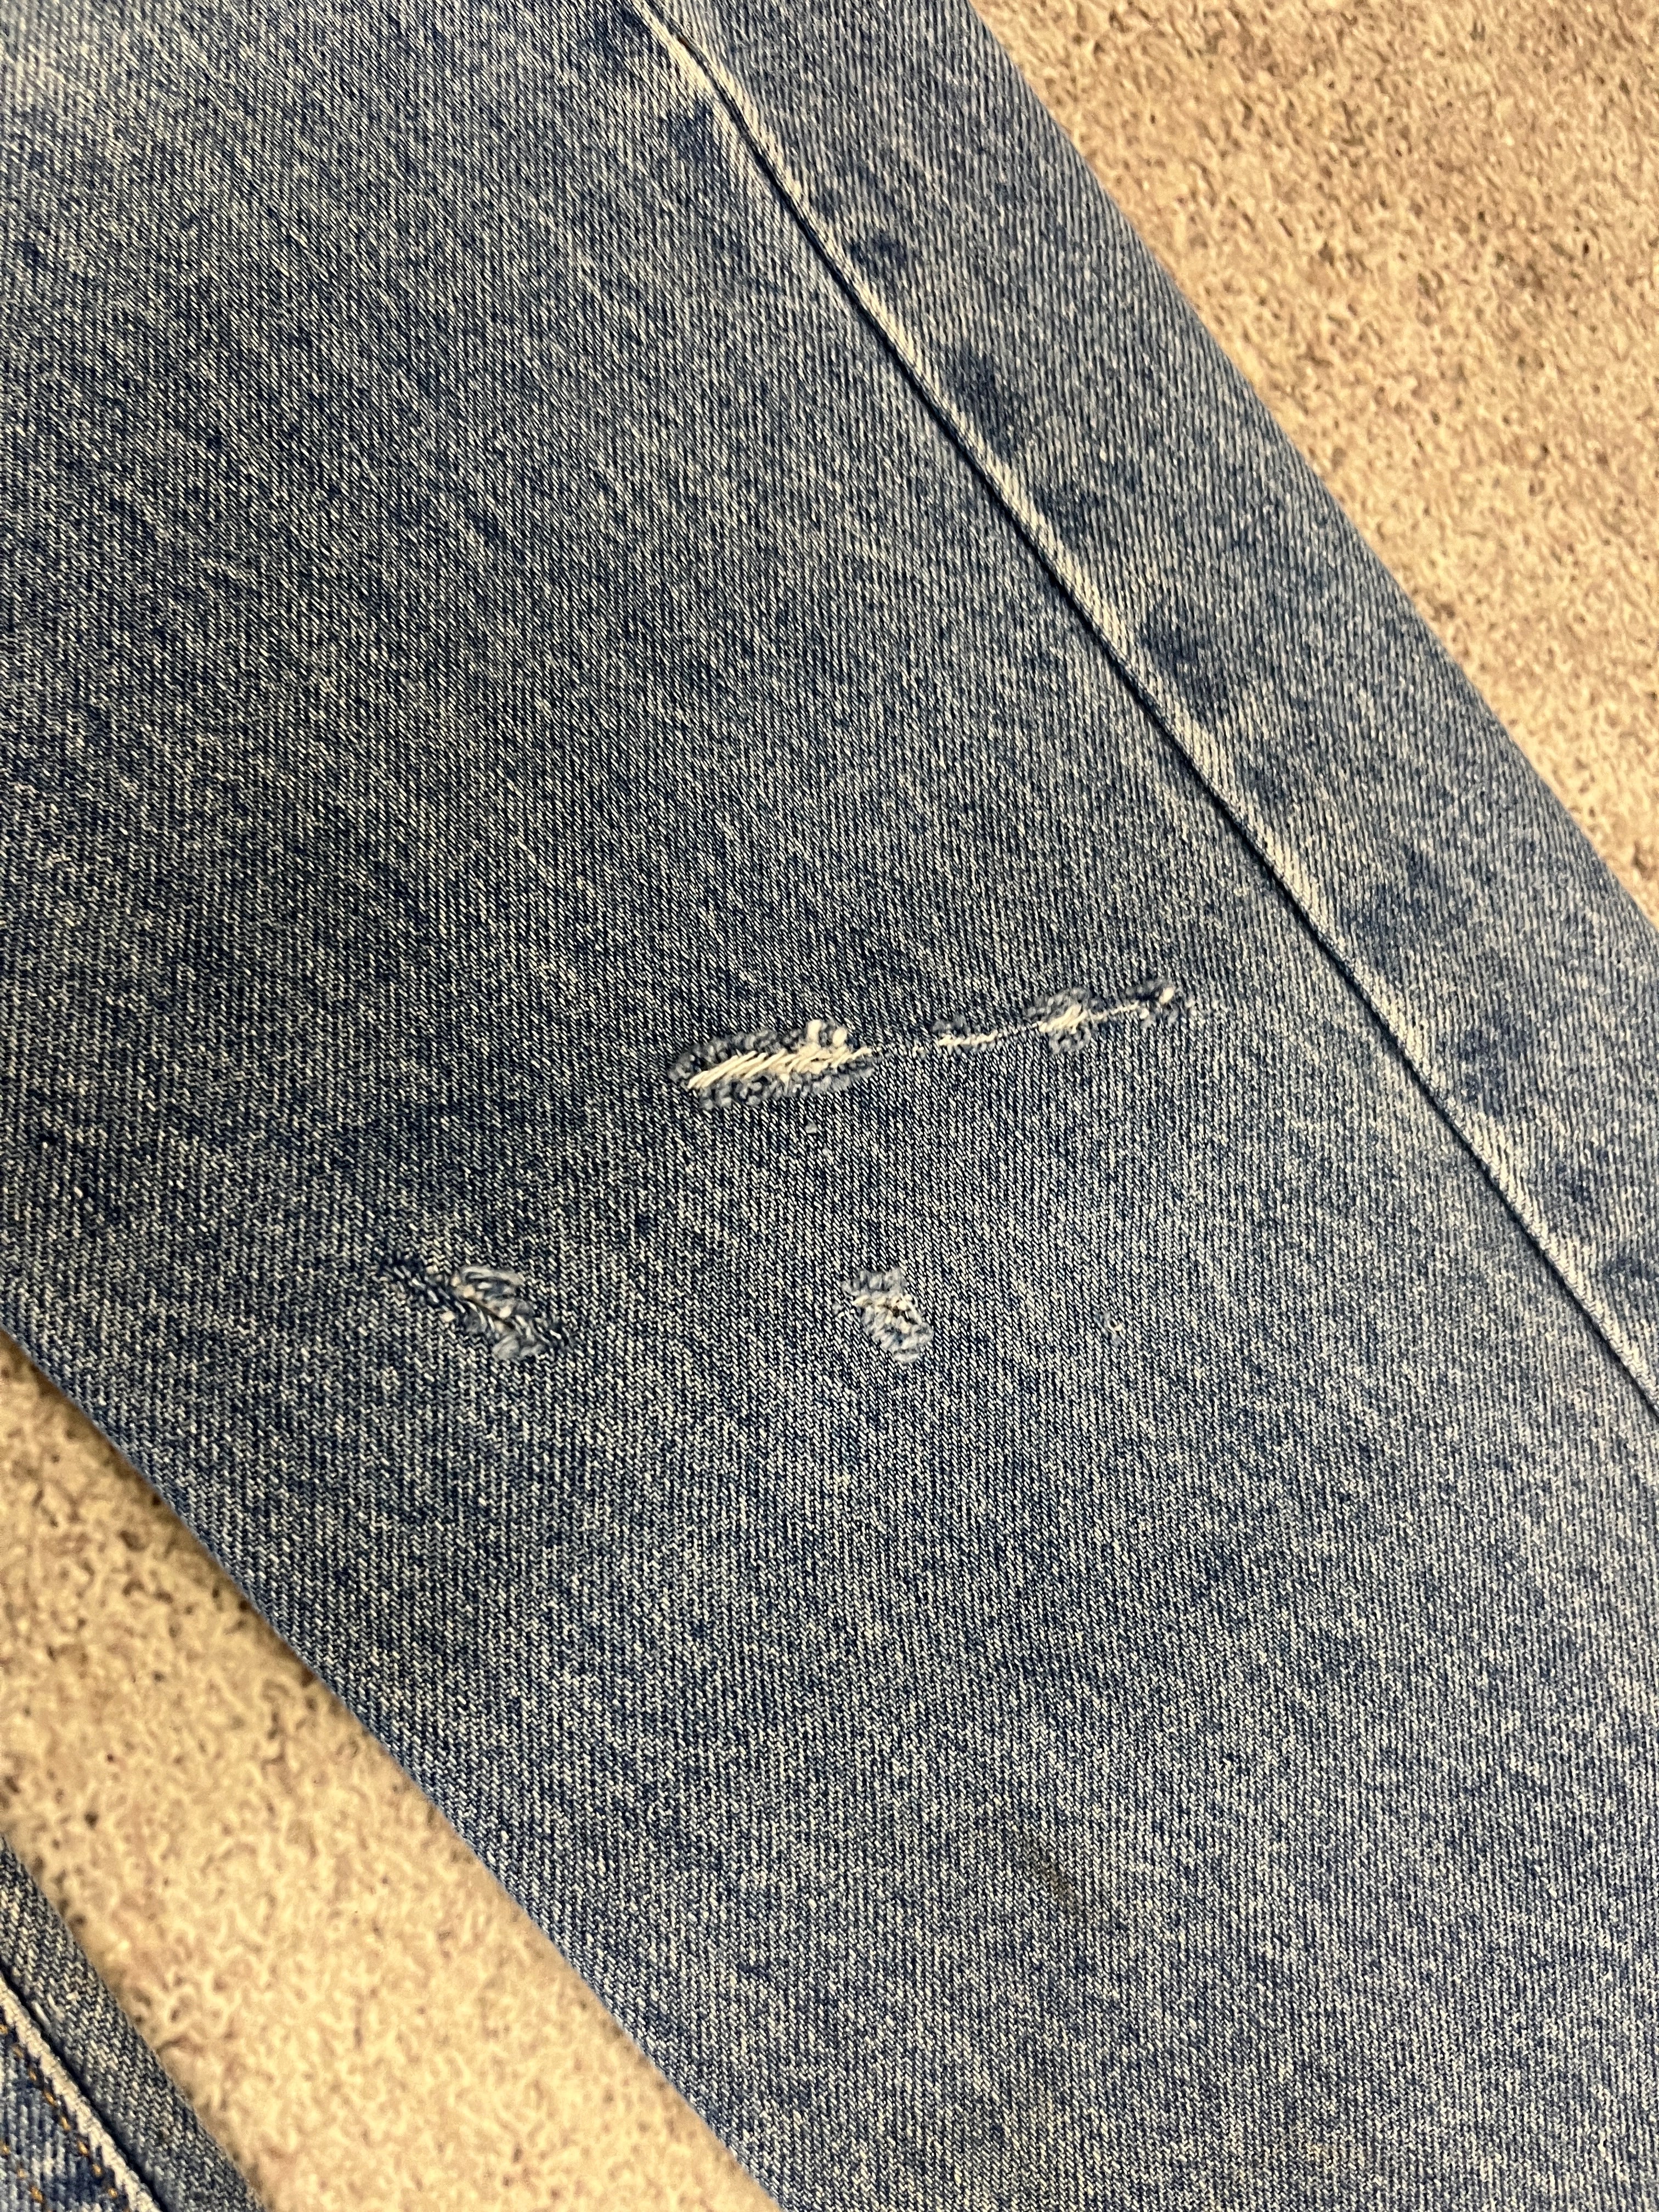 Vintage Carhartt Jeans Blue // W34 L32 - RHAGHOUSE VINTAGE